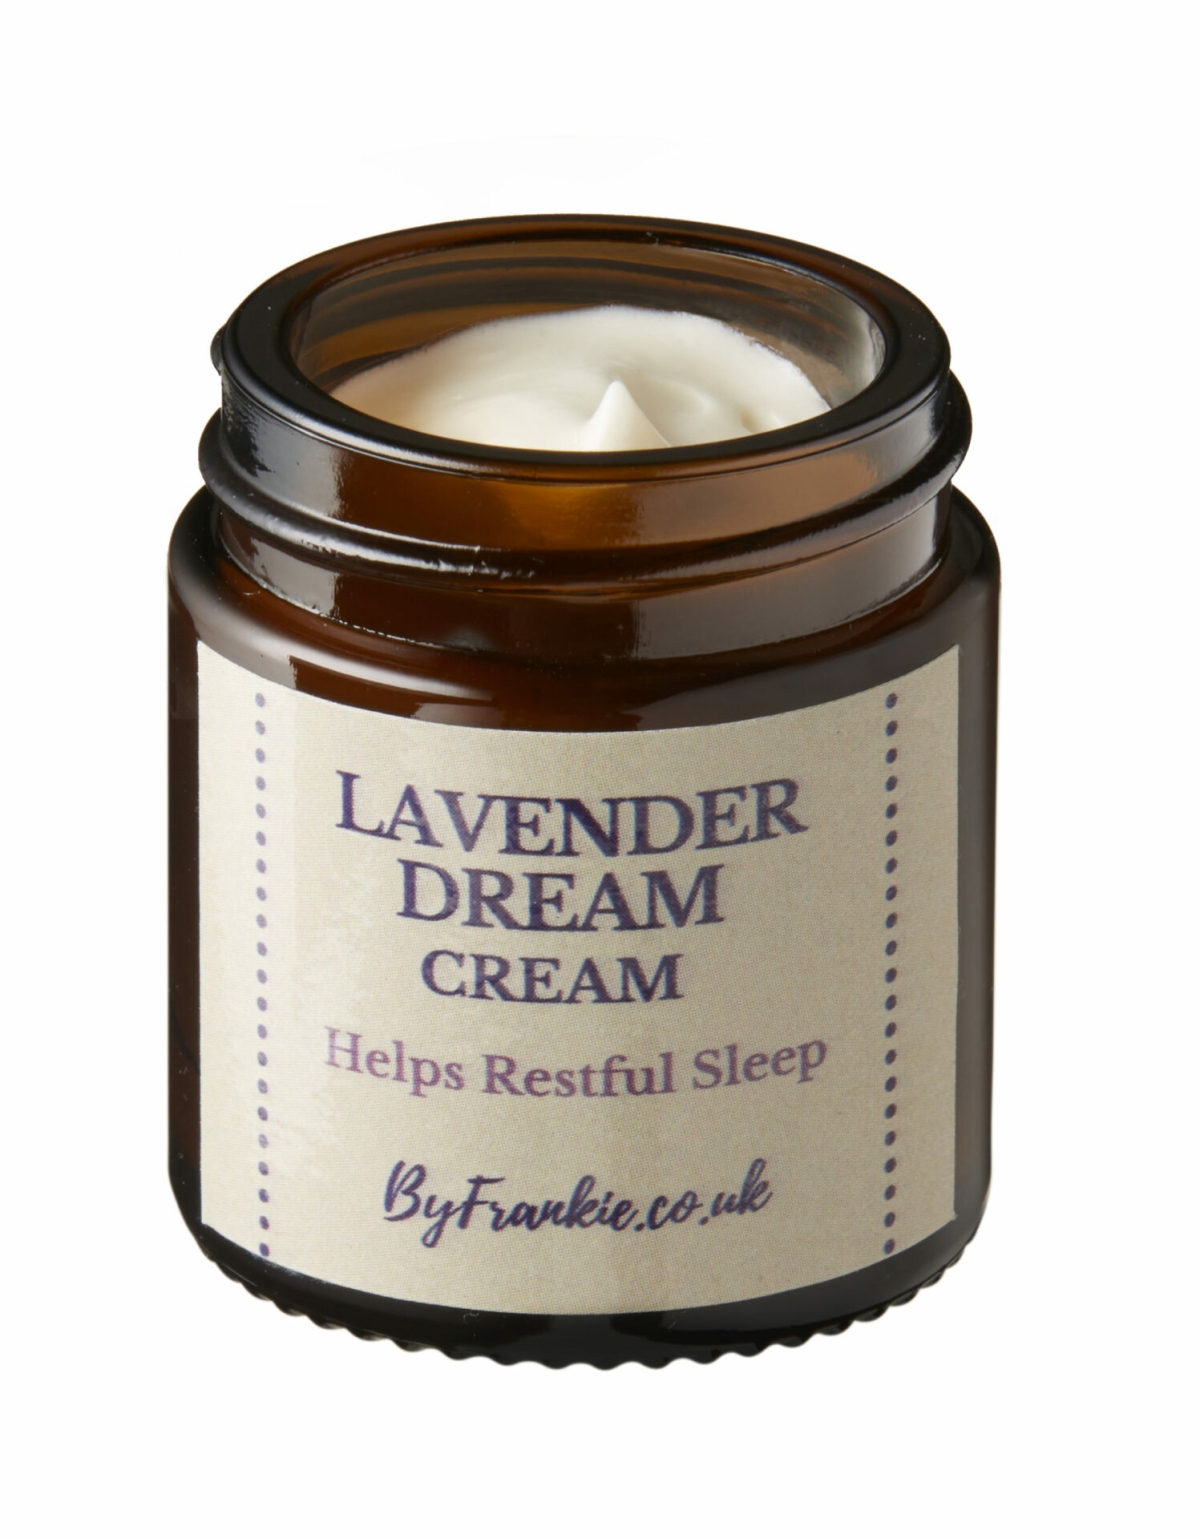 Lavender Dream Cream 60g at Henley Circle Online Shop